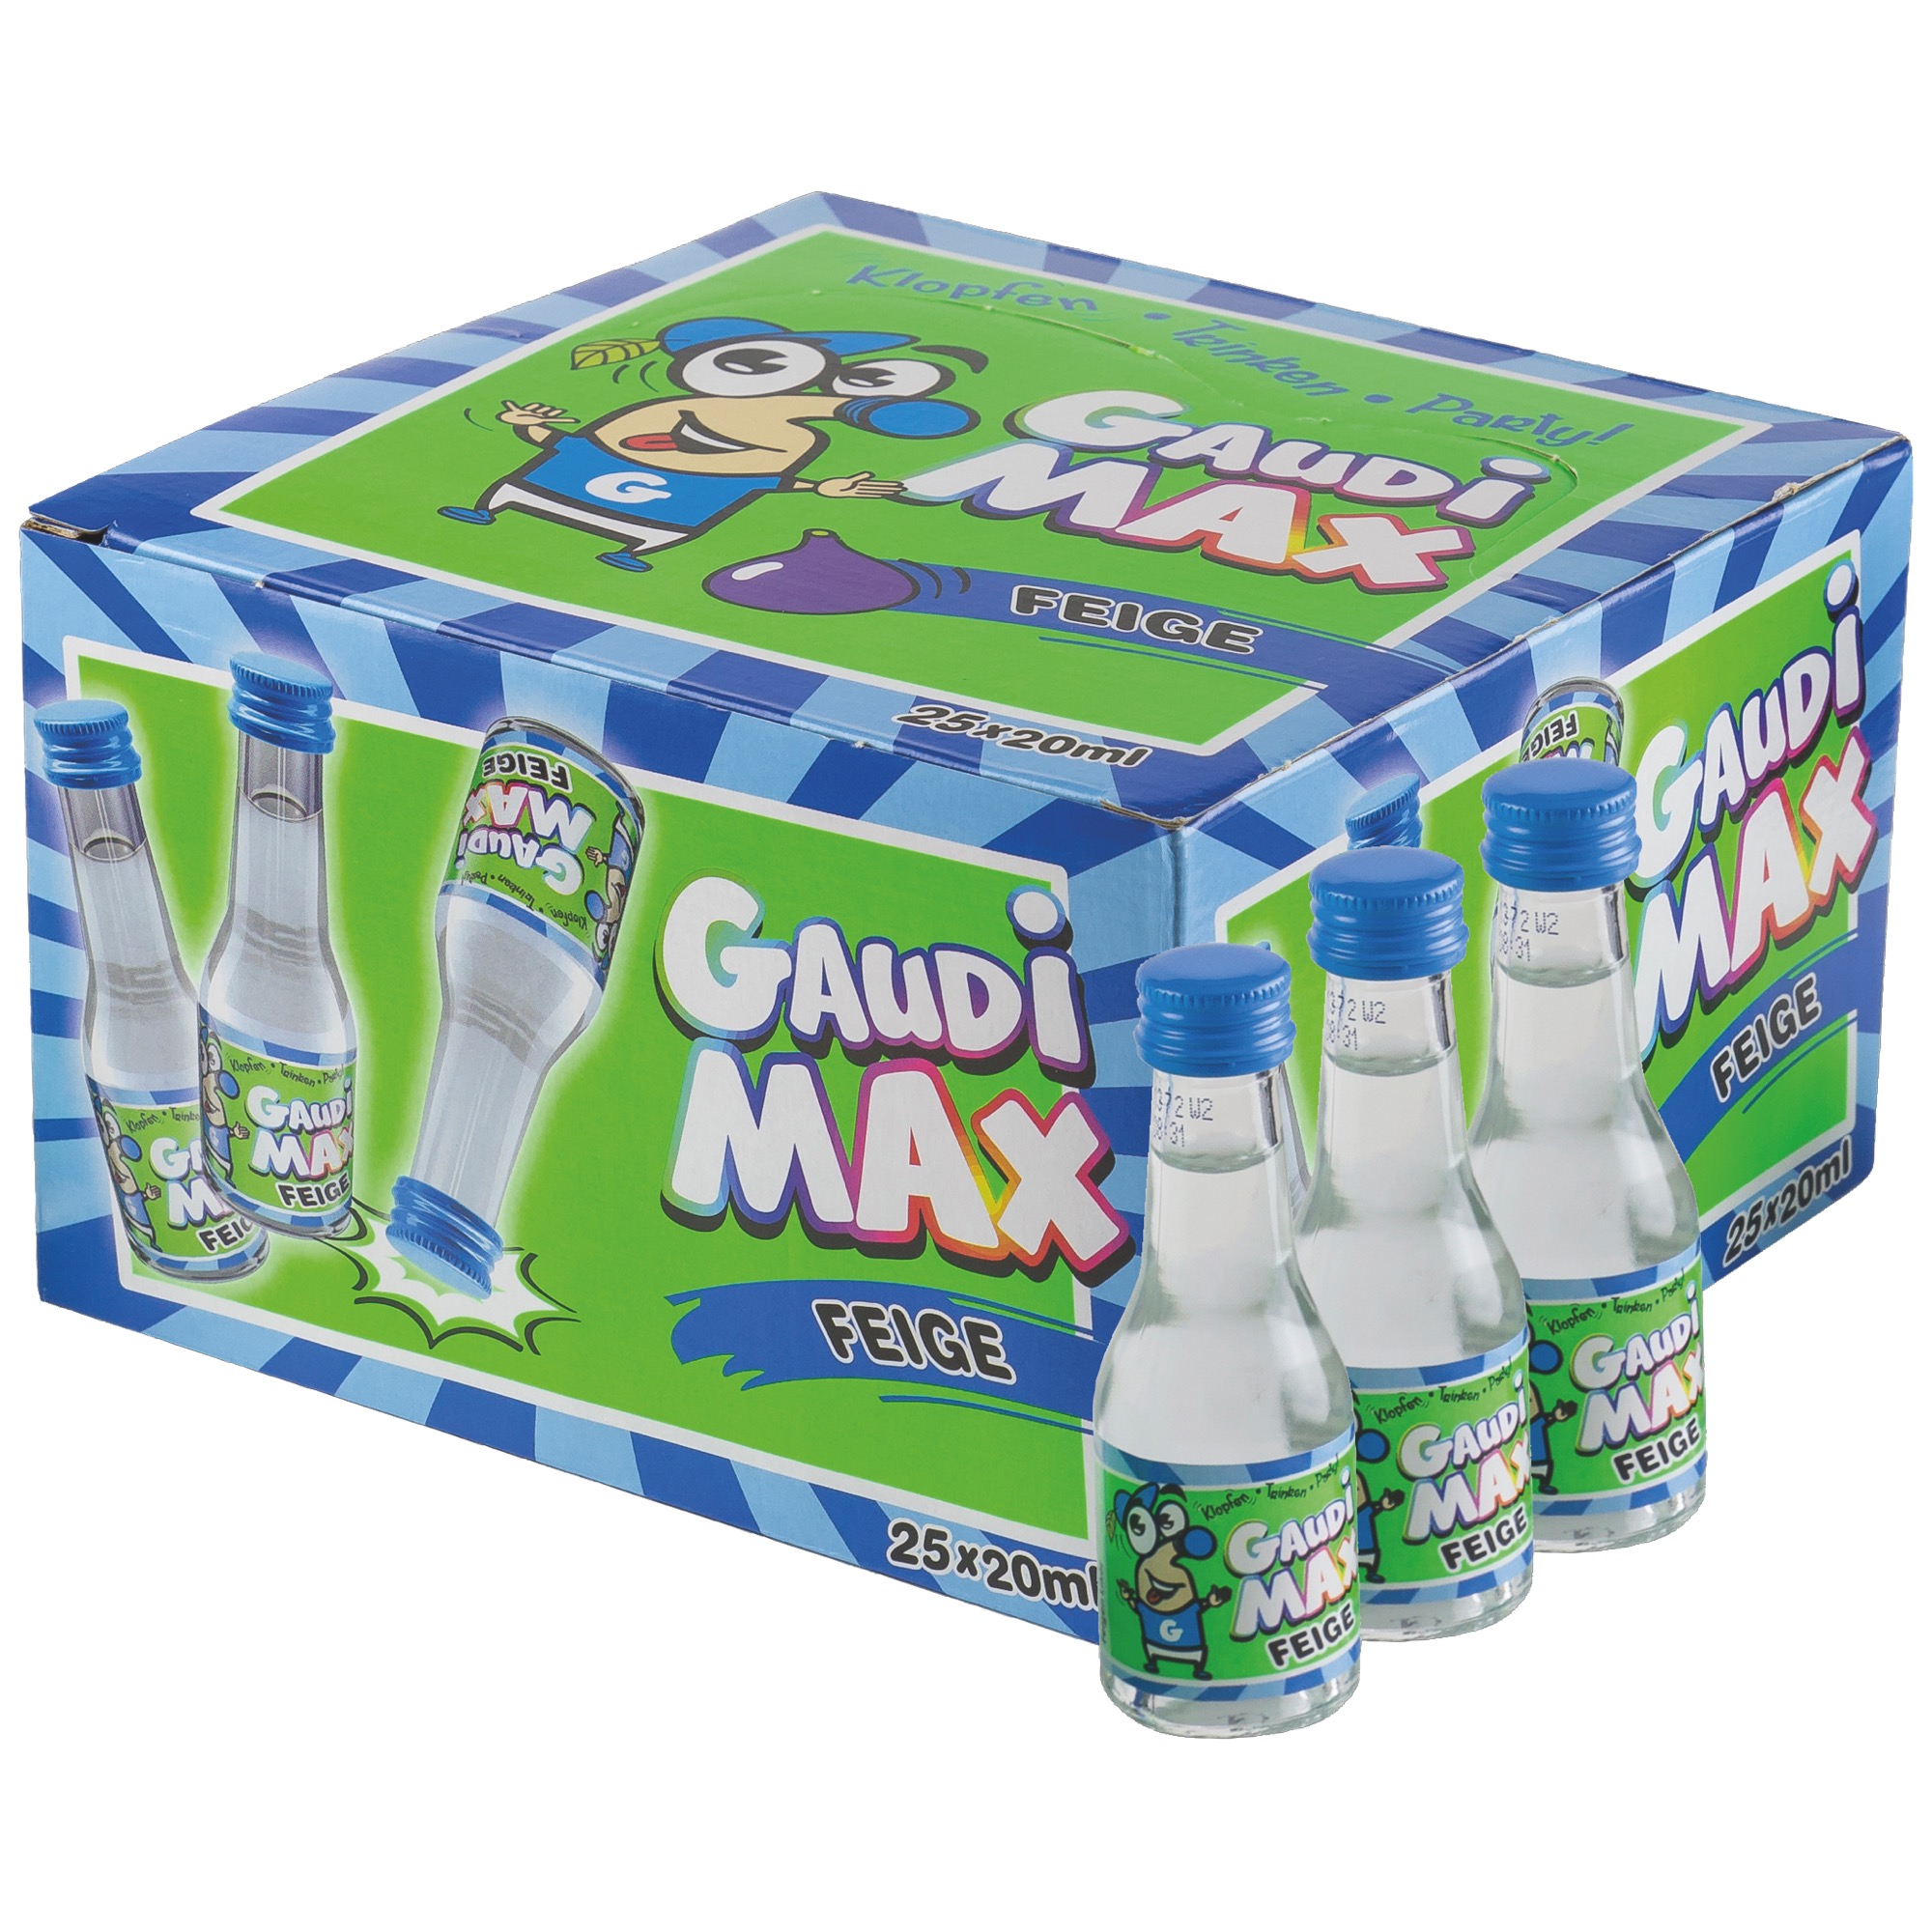 Gaudimax 25x20ml, figová vodka